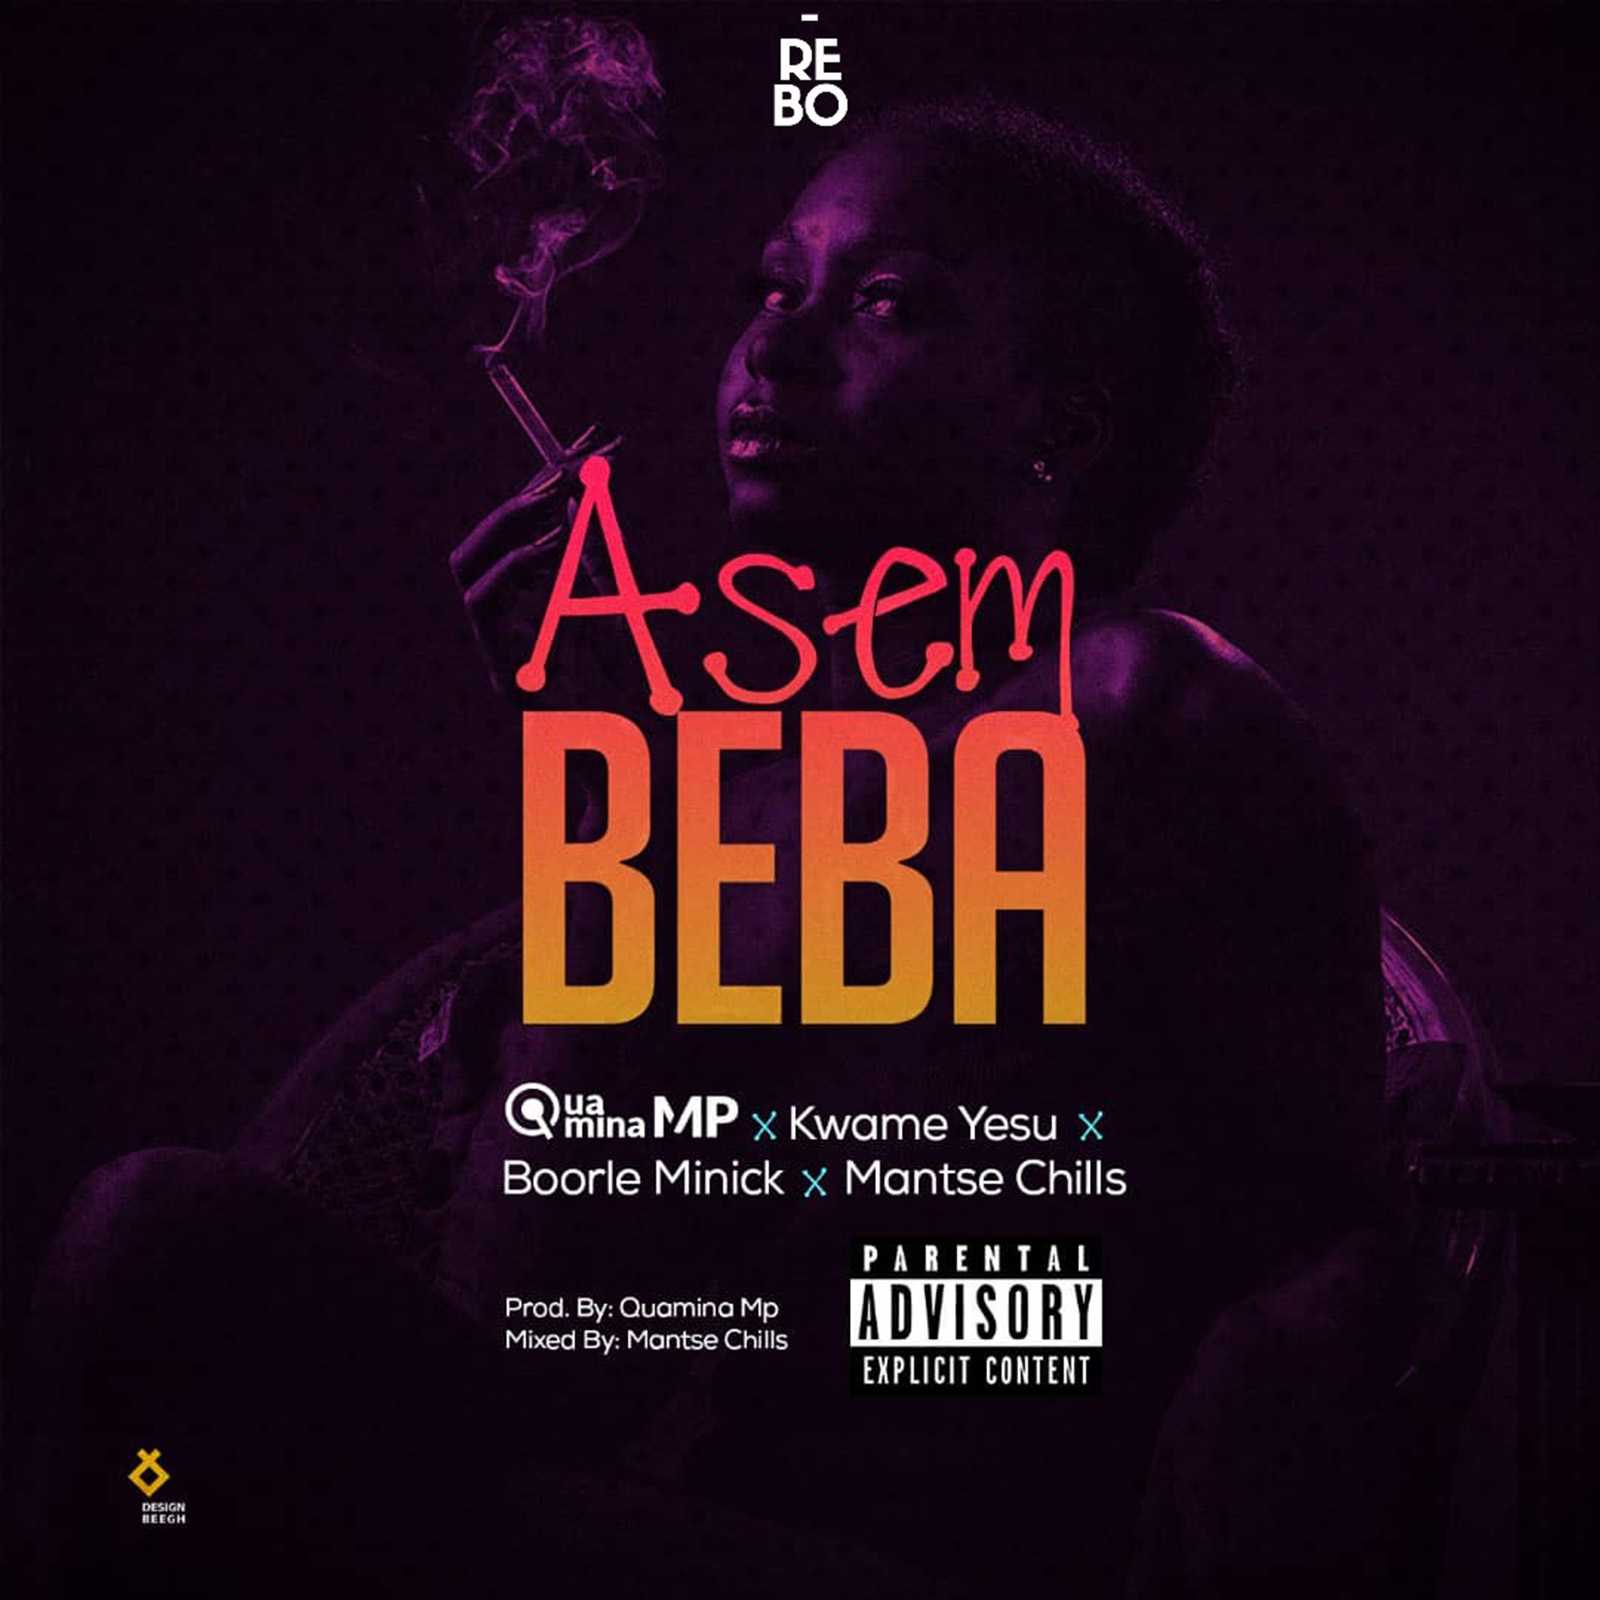 Asem Beba by Rebo Tribe feat. Quamina MP, Kwame Yesu, Boorle Minick & Mantse Chills